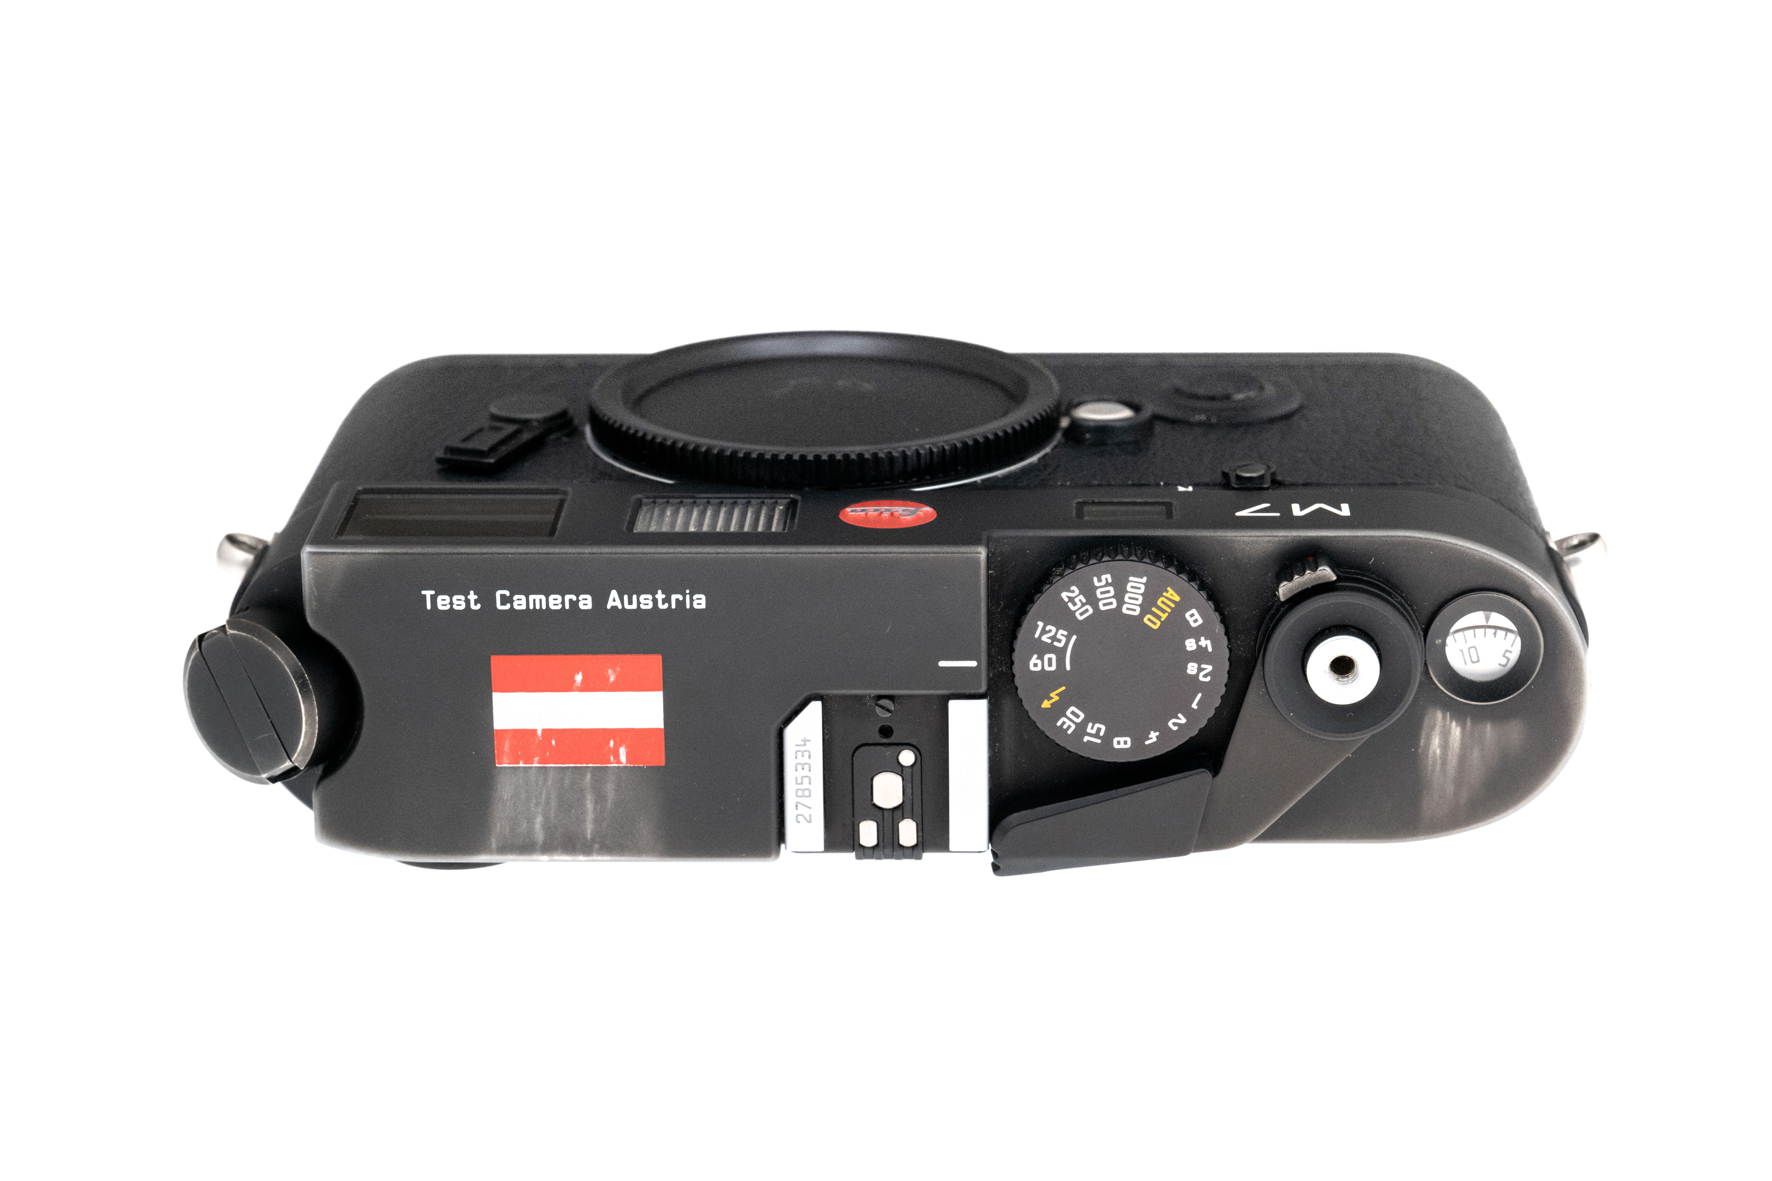 Leica M7 0,72 schwarz, a la Carte "Test Camera Austria" 